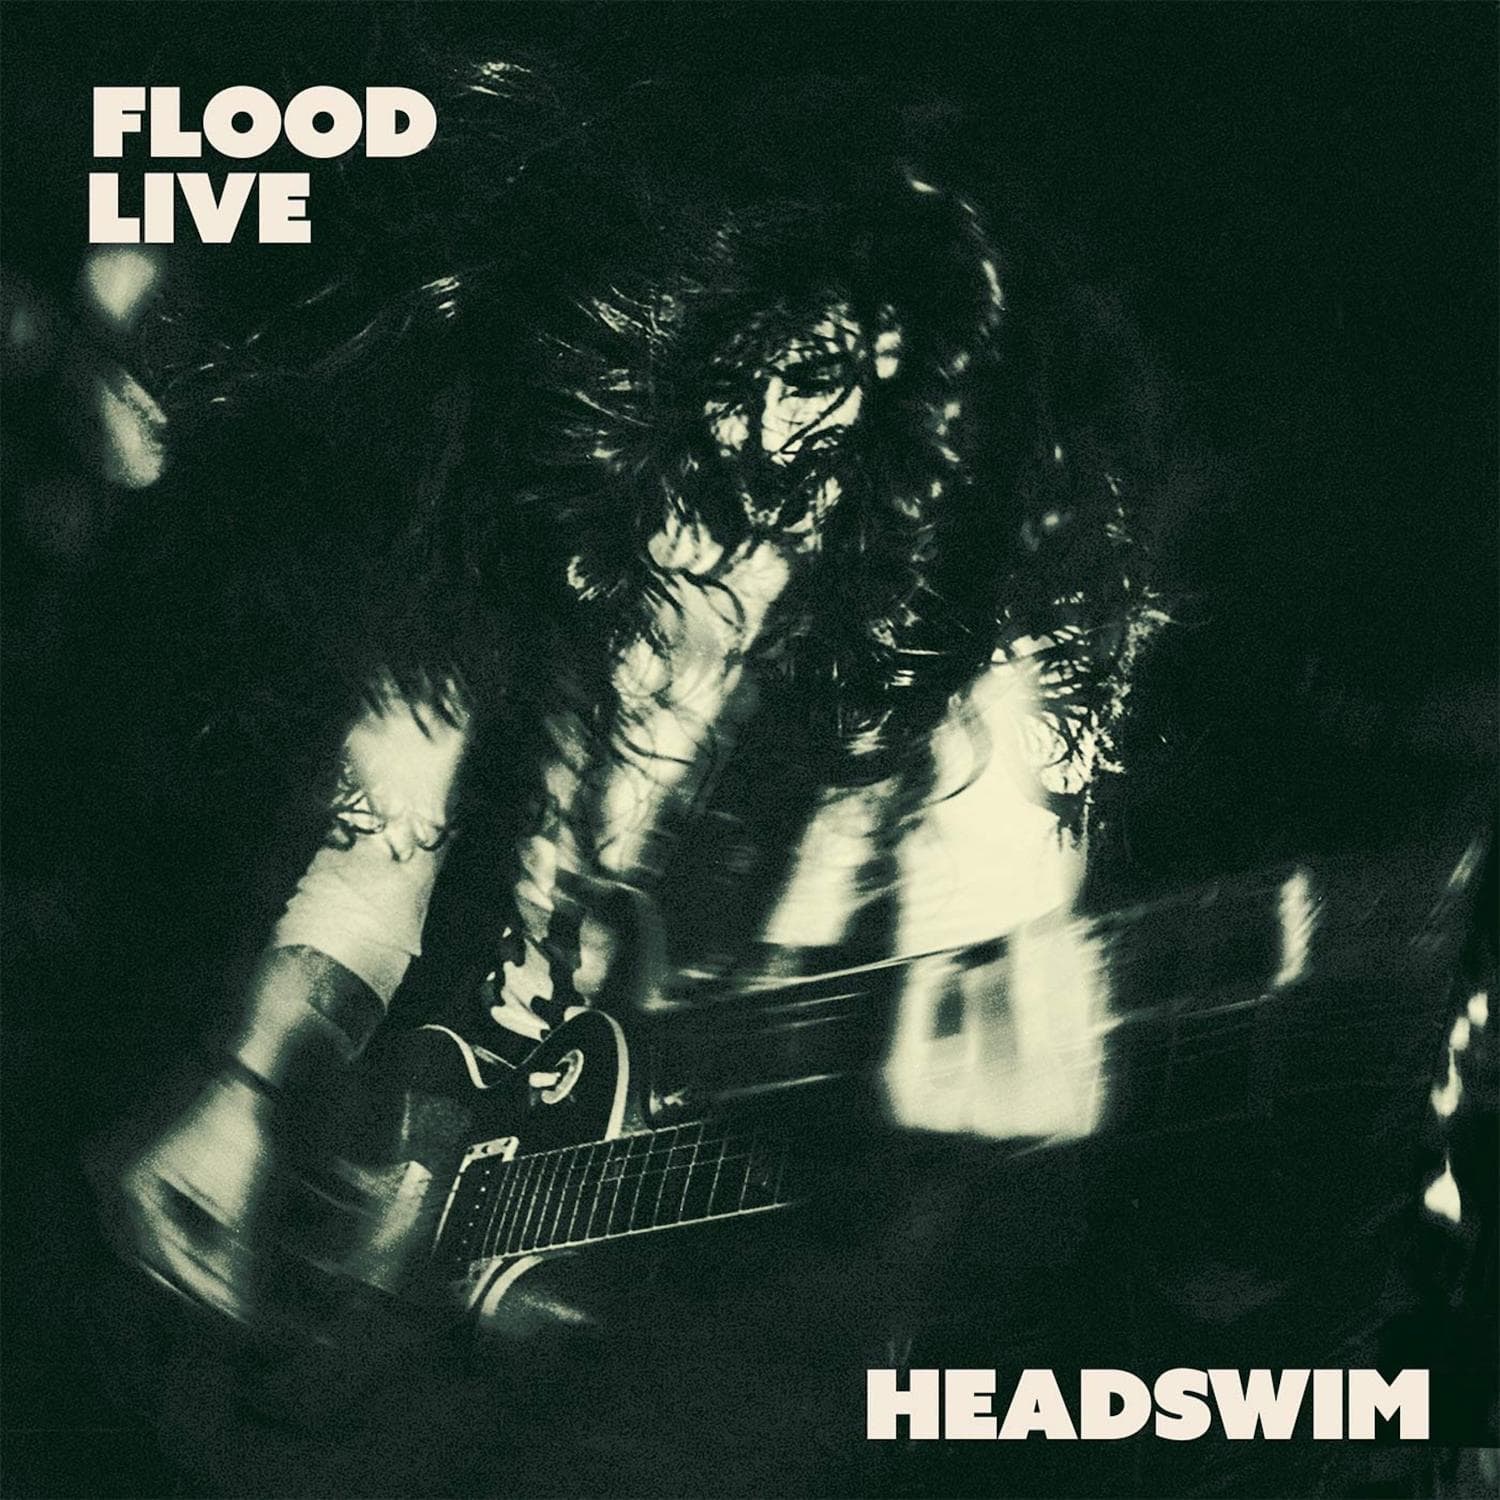 Headswim – Flood Live Vinyl Review